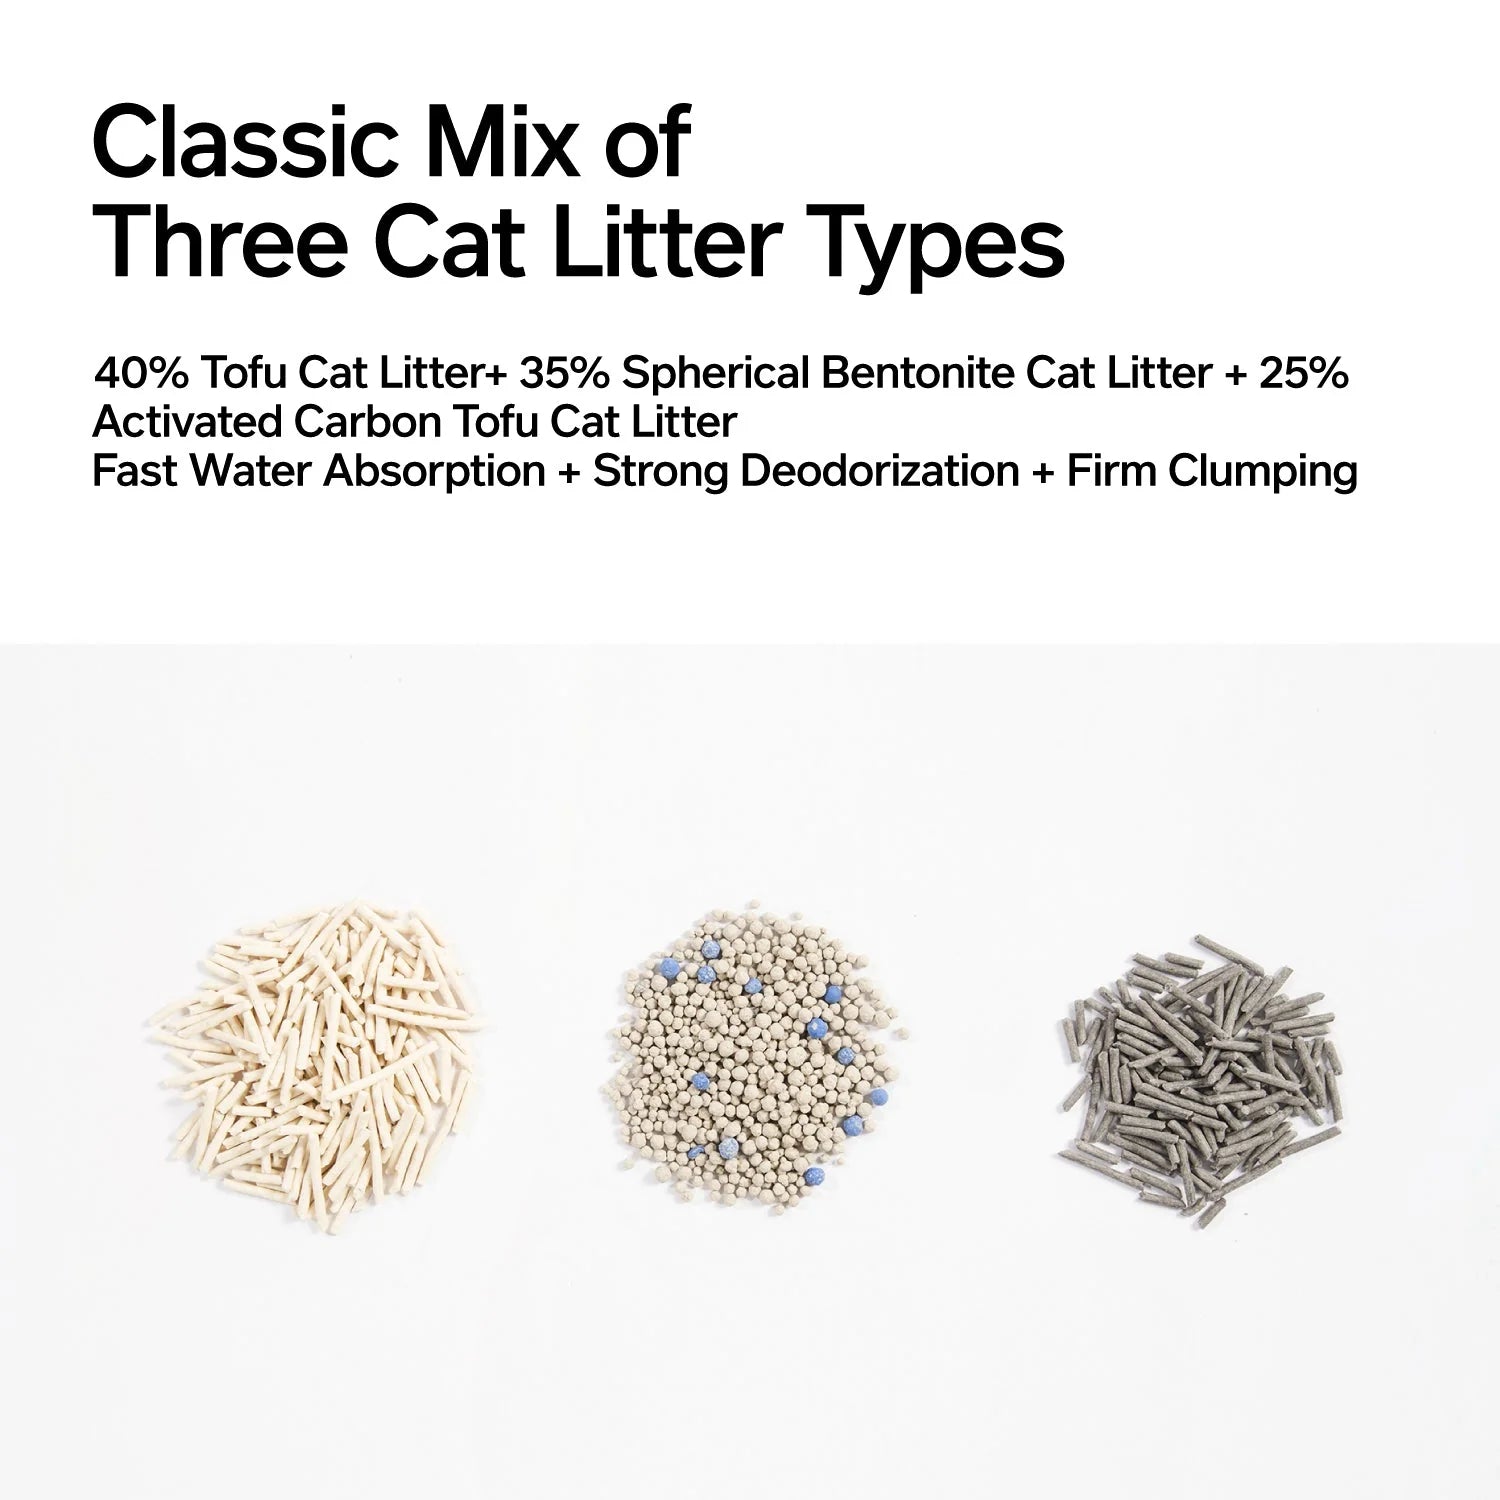 Pidan 3-in-1 Mixed Cat Tofu Litter Pail 5.2 kg